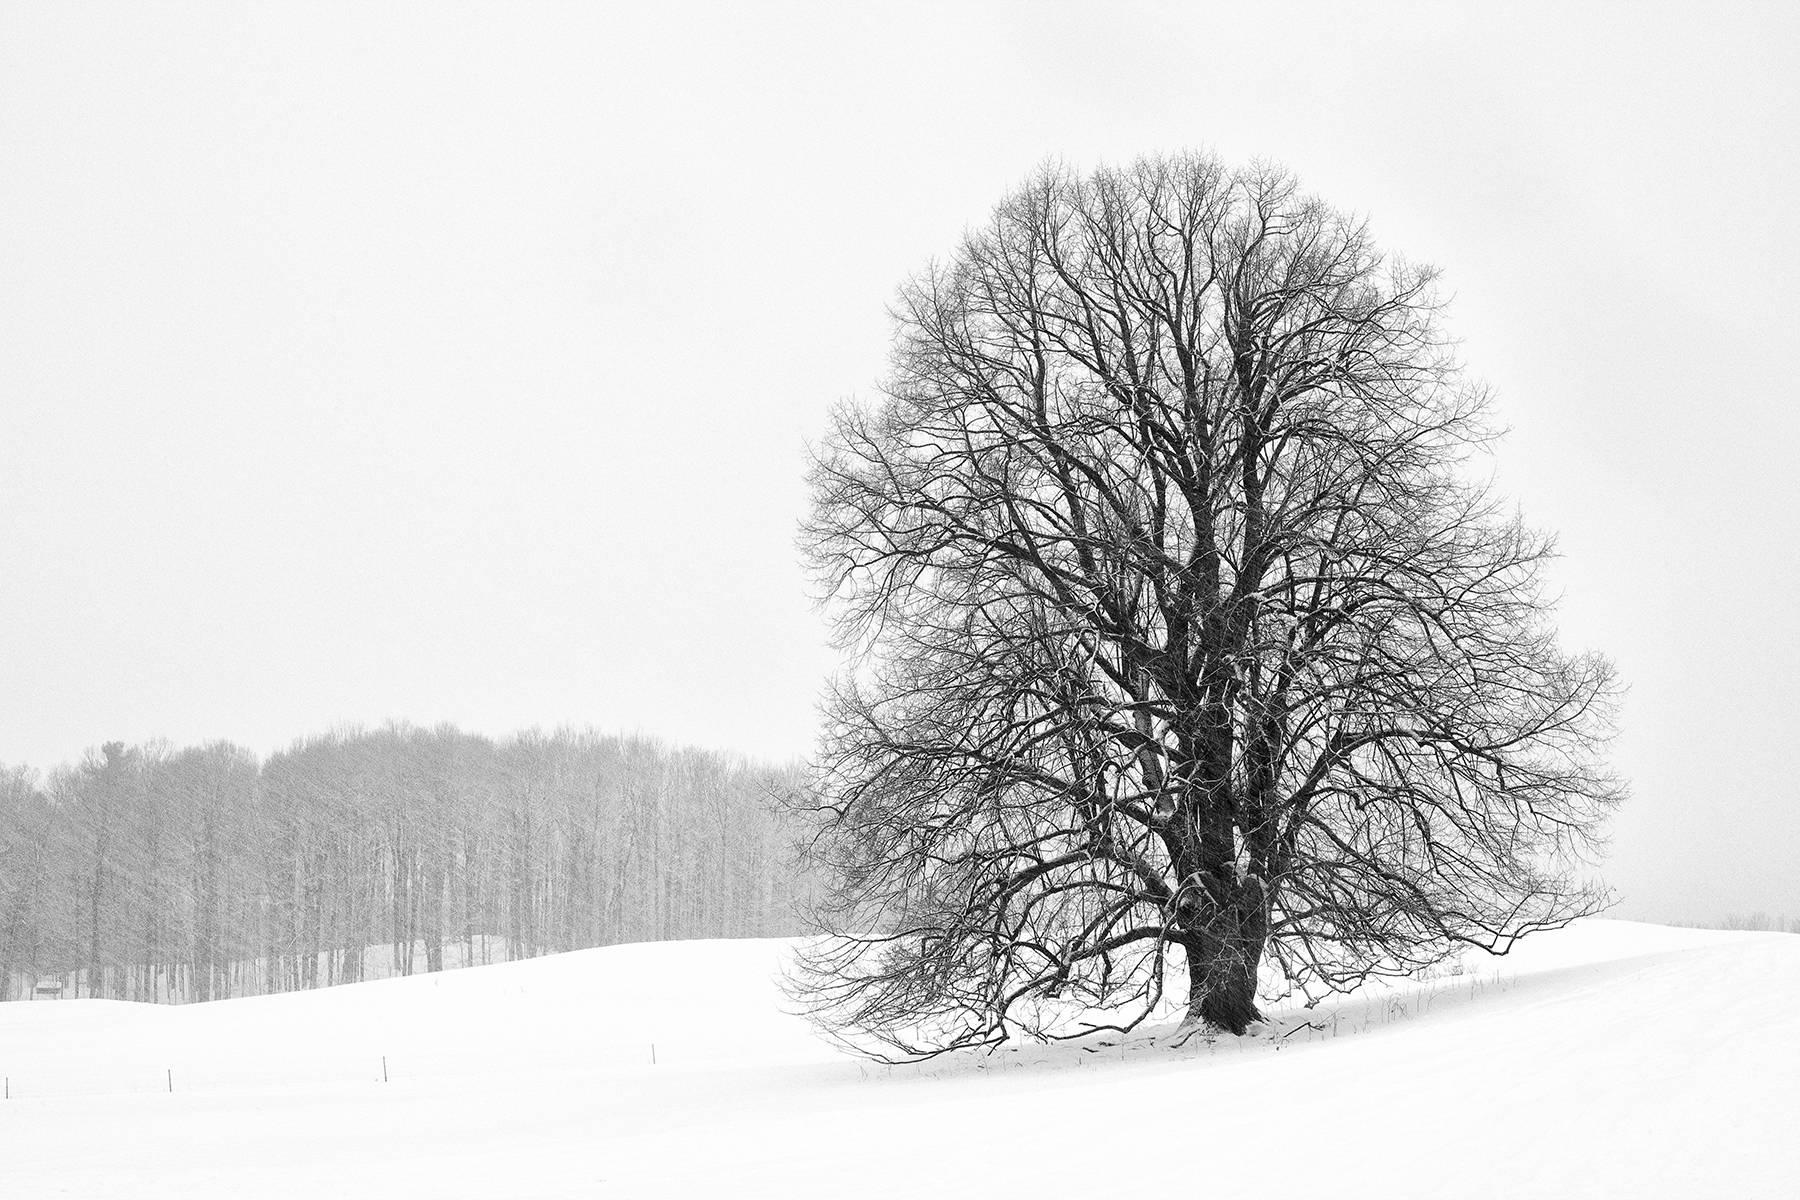 Landscape Photograph Rebecca Skinner - "Lonely Tree", paysage, noir et blanc, hiver, neige, Nouvelle-Angleterre, photographie